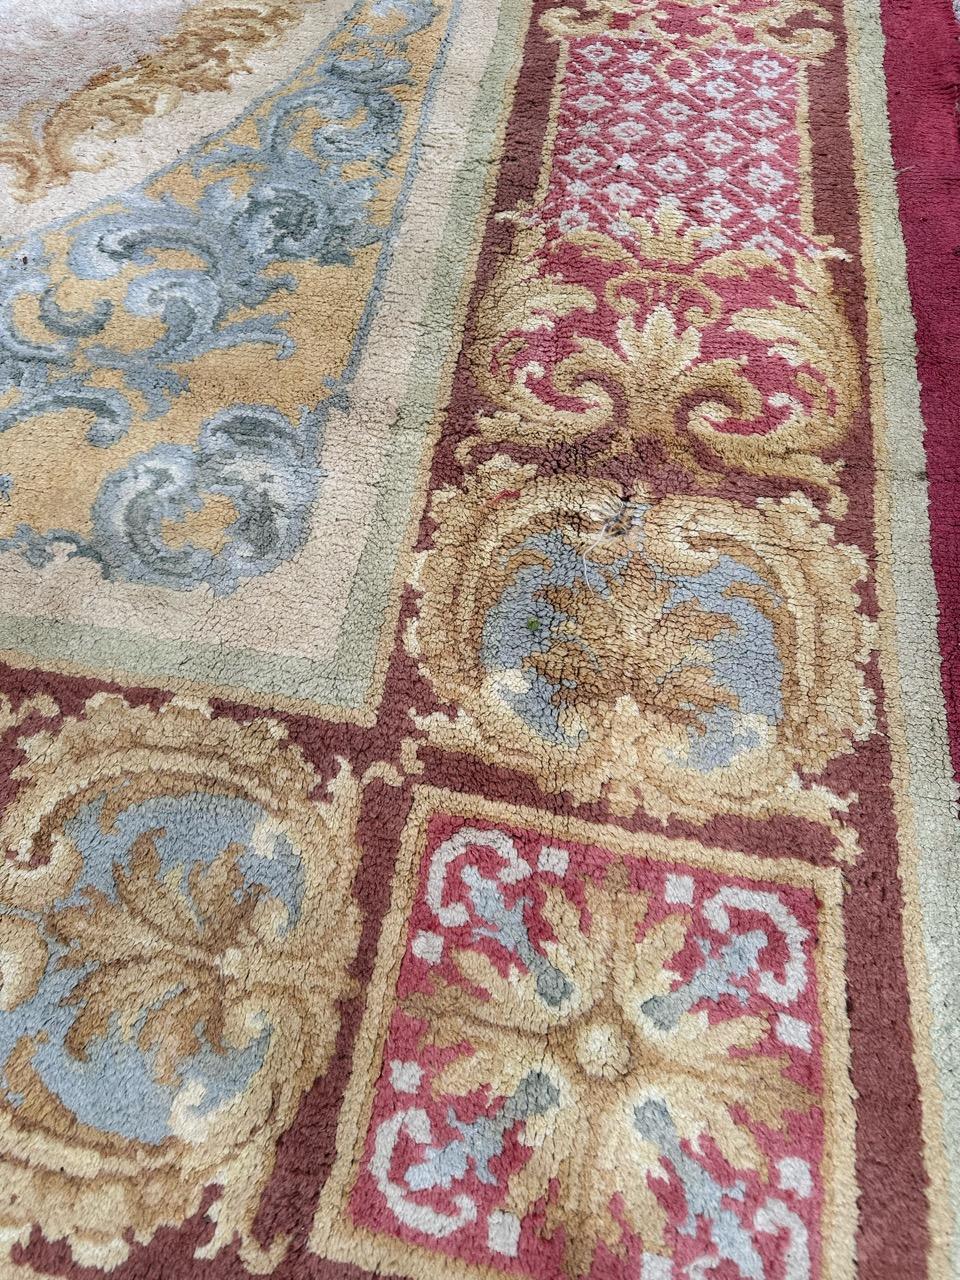 Aubusson pretty antique large Spanish Savonnerie rug  For Sale